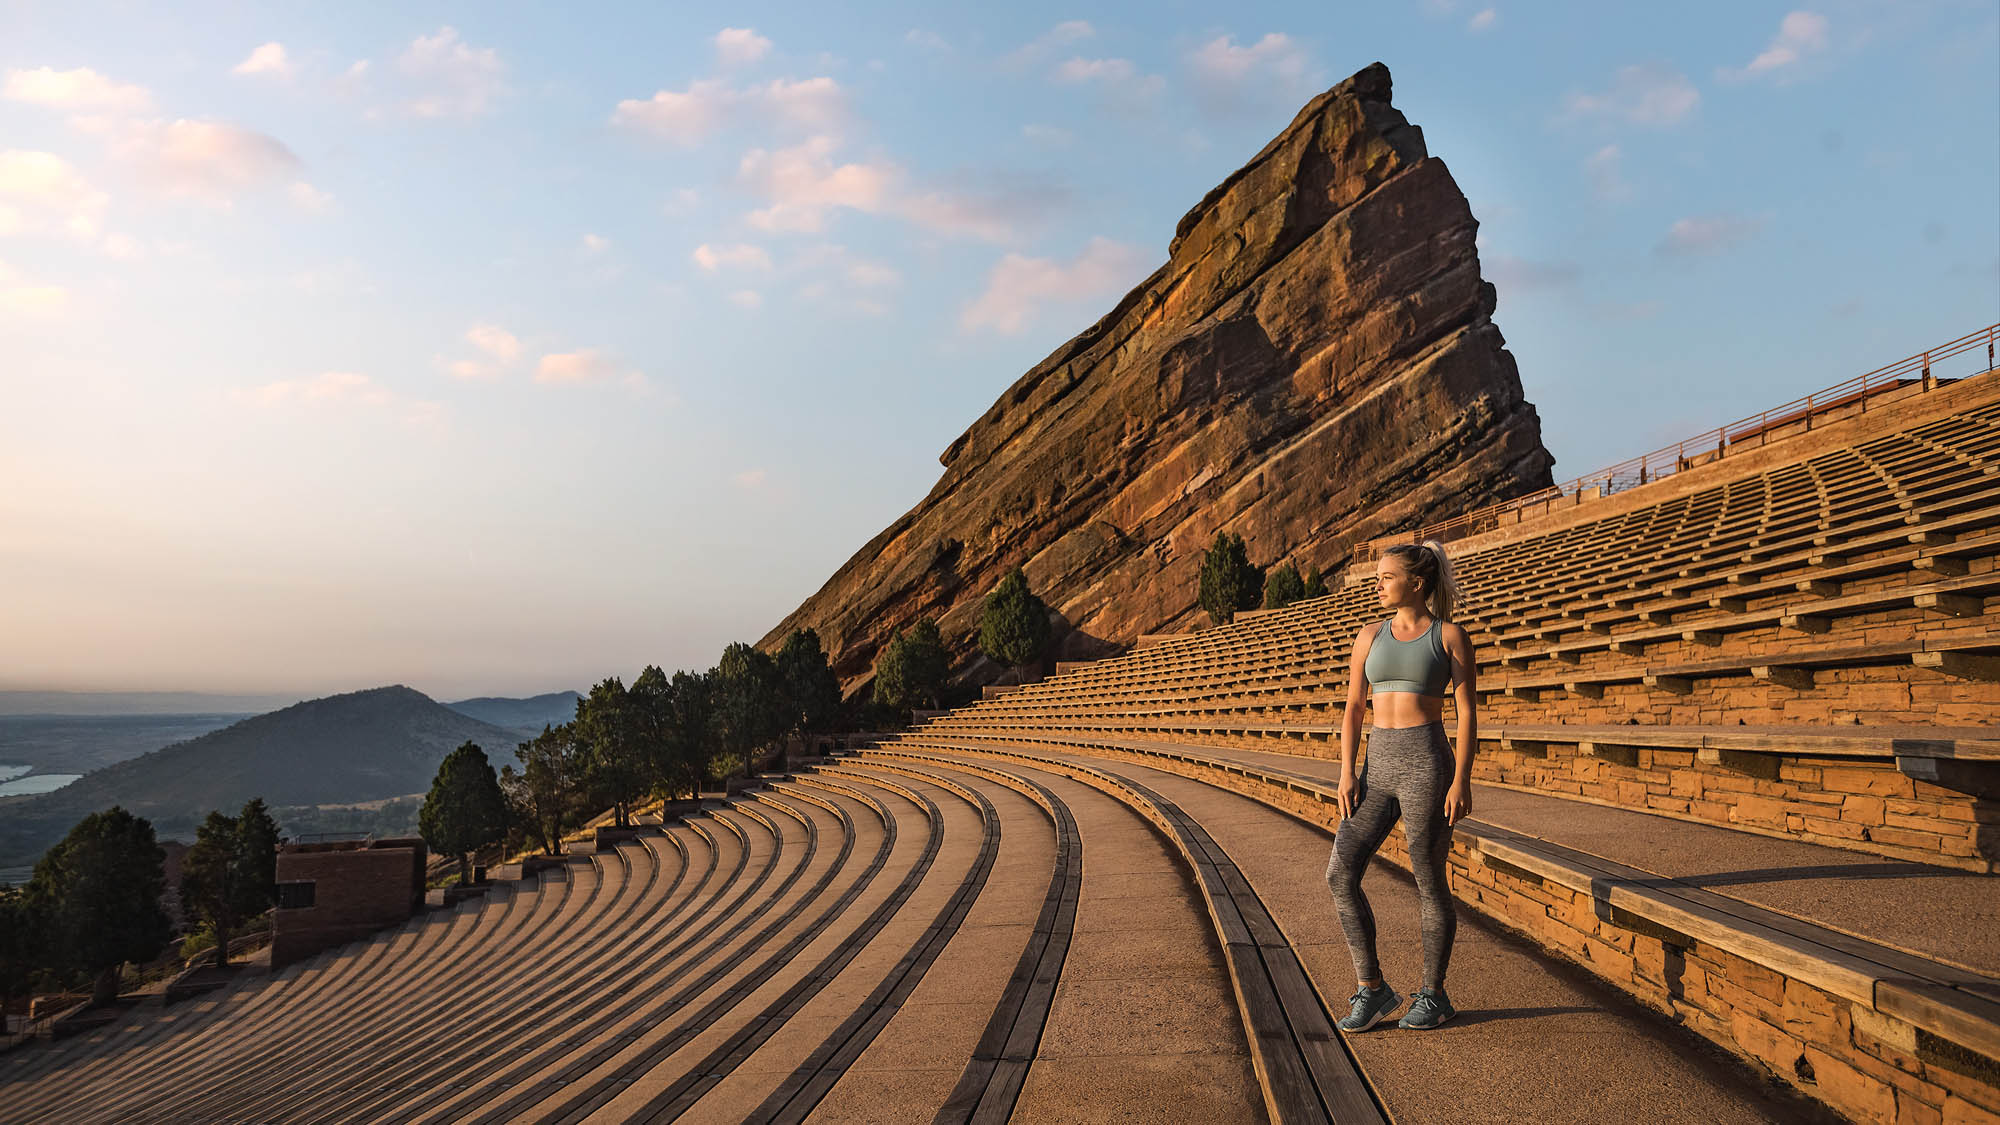 Colorado-Morrison-Red_Rocks-Amphitheater